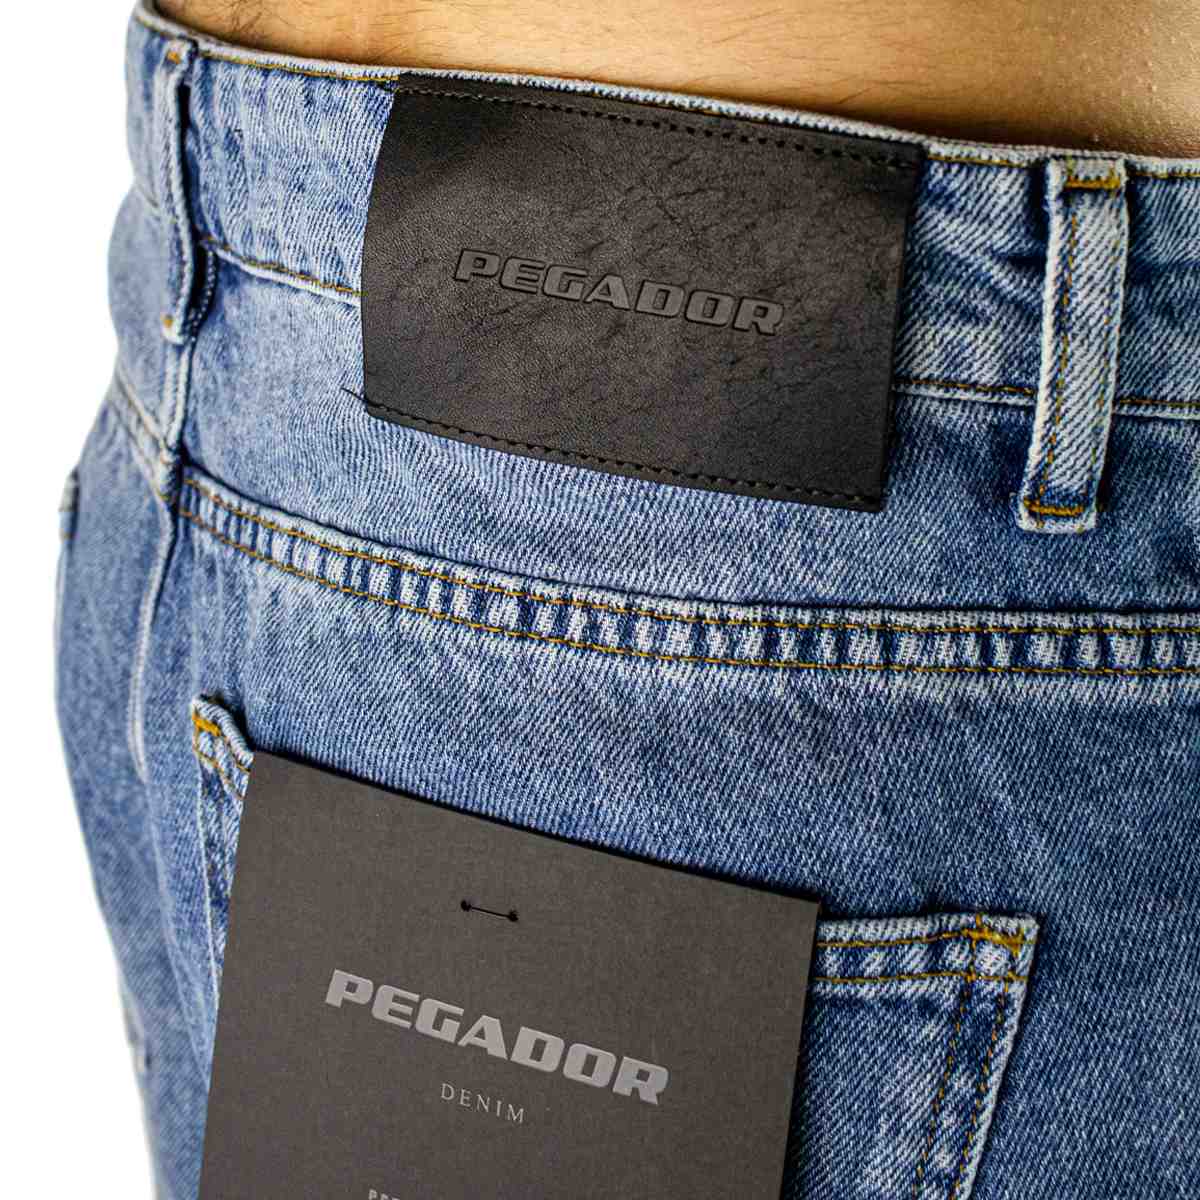 Pegador Elder Jeans Short 60102602-